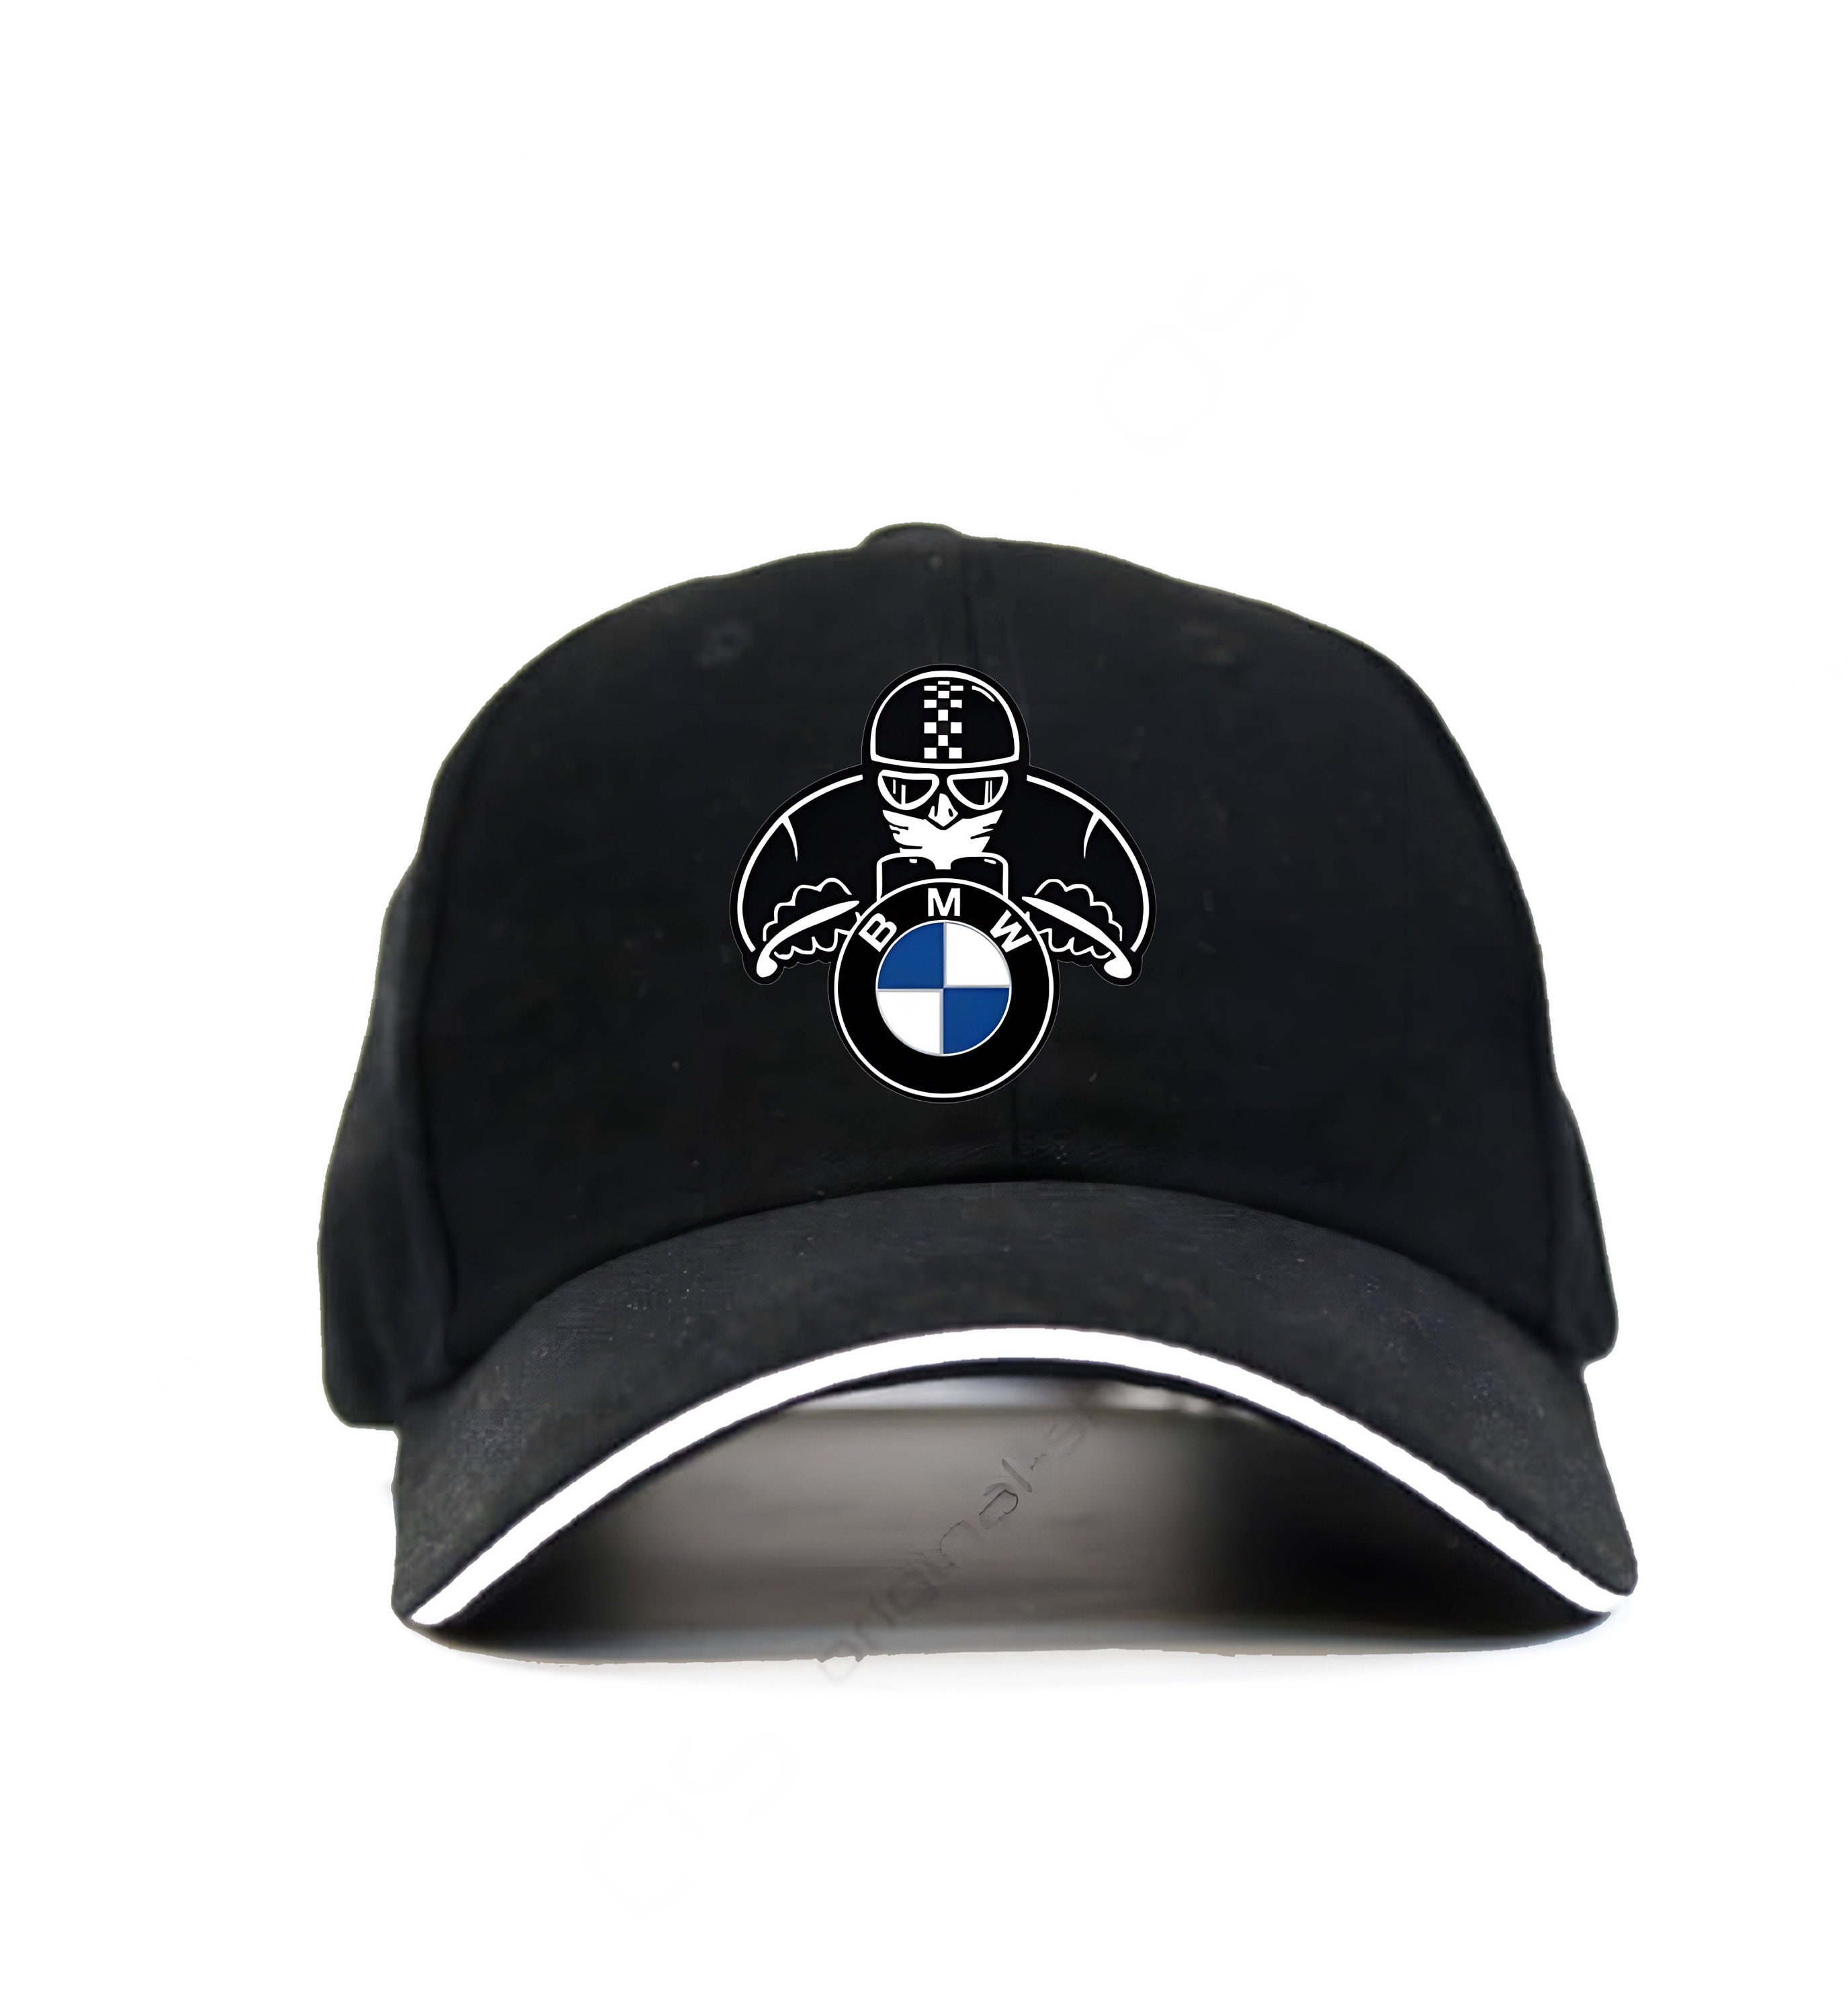 BMW Neu Original BMW Schwarz Emblem Verstellbare Kappe Mütze